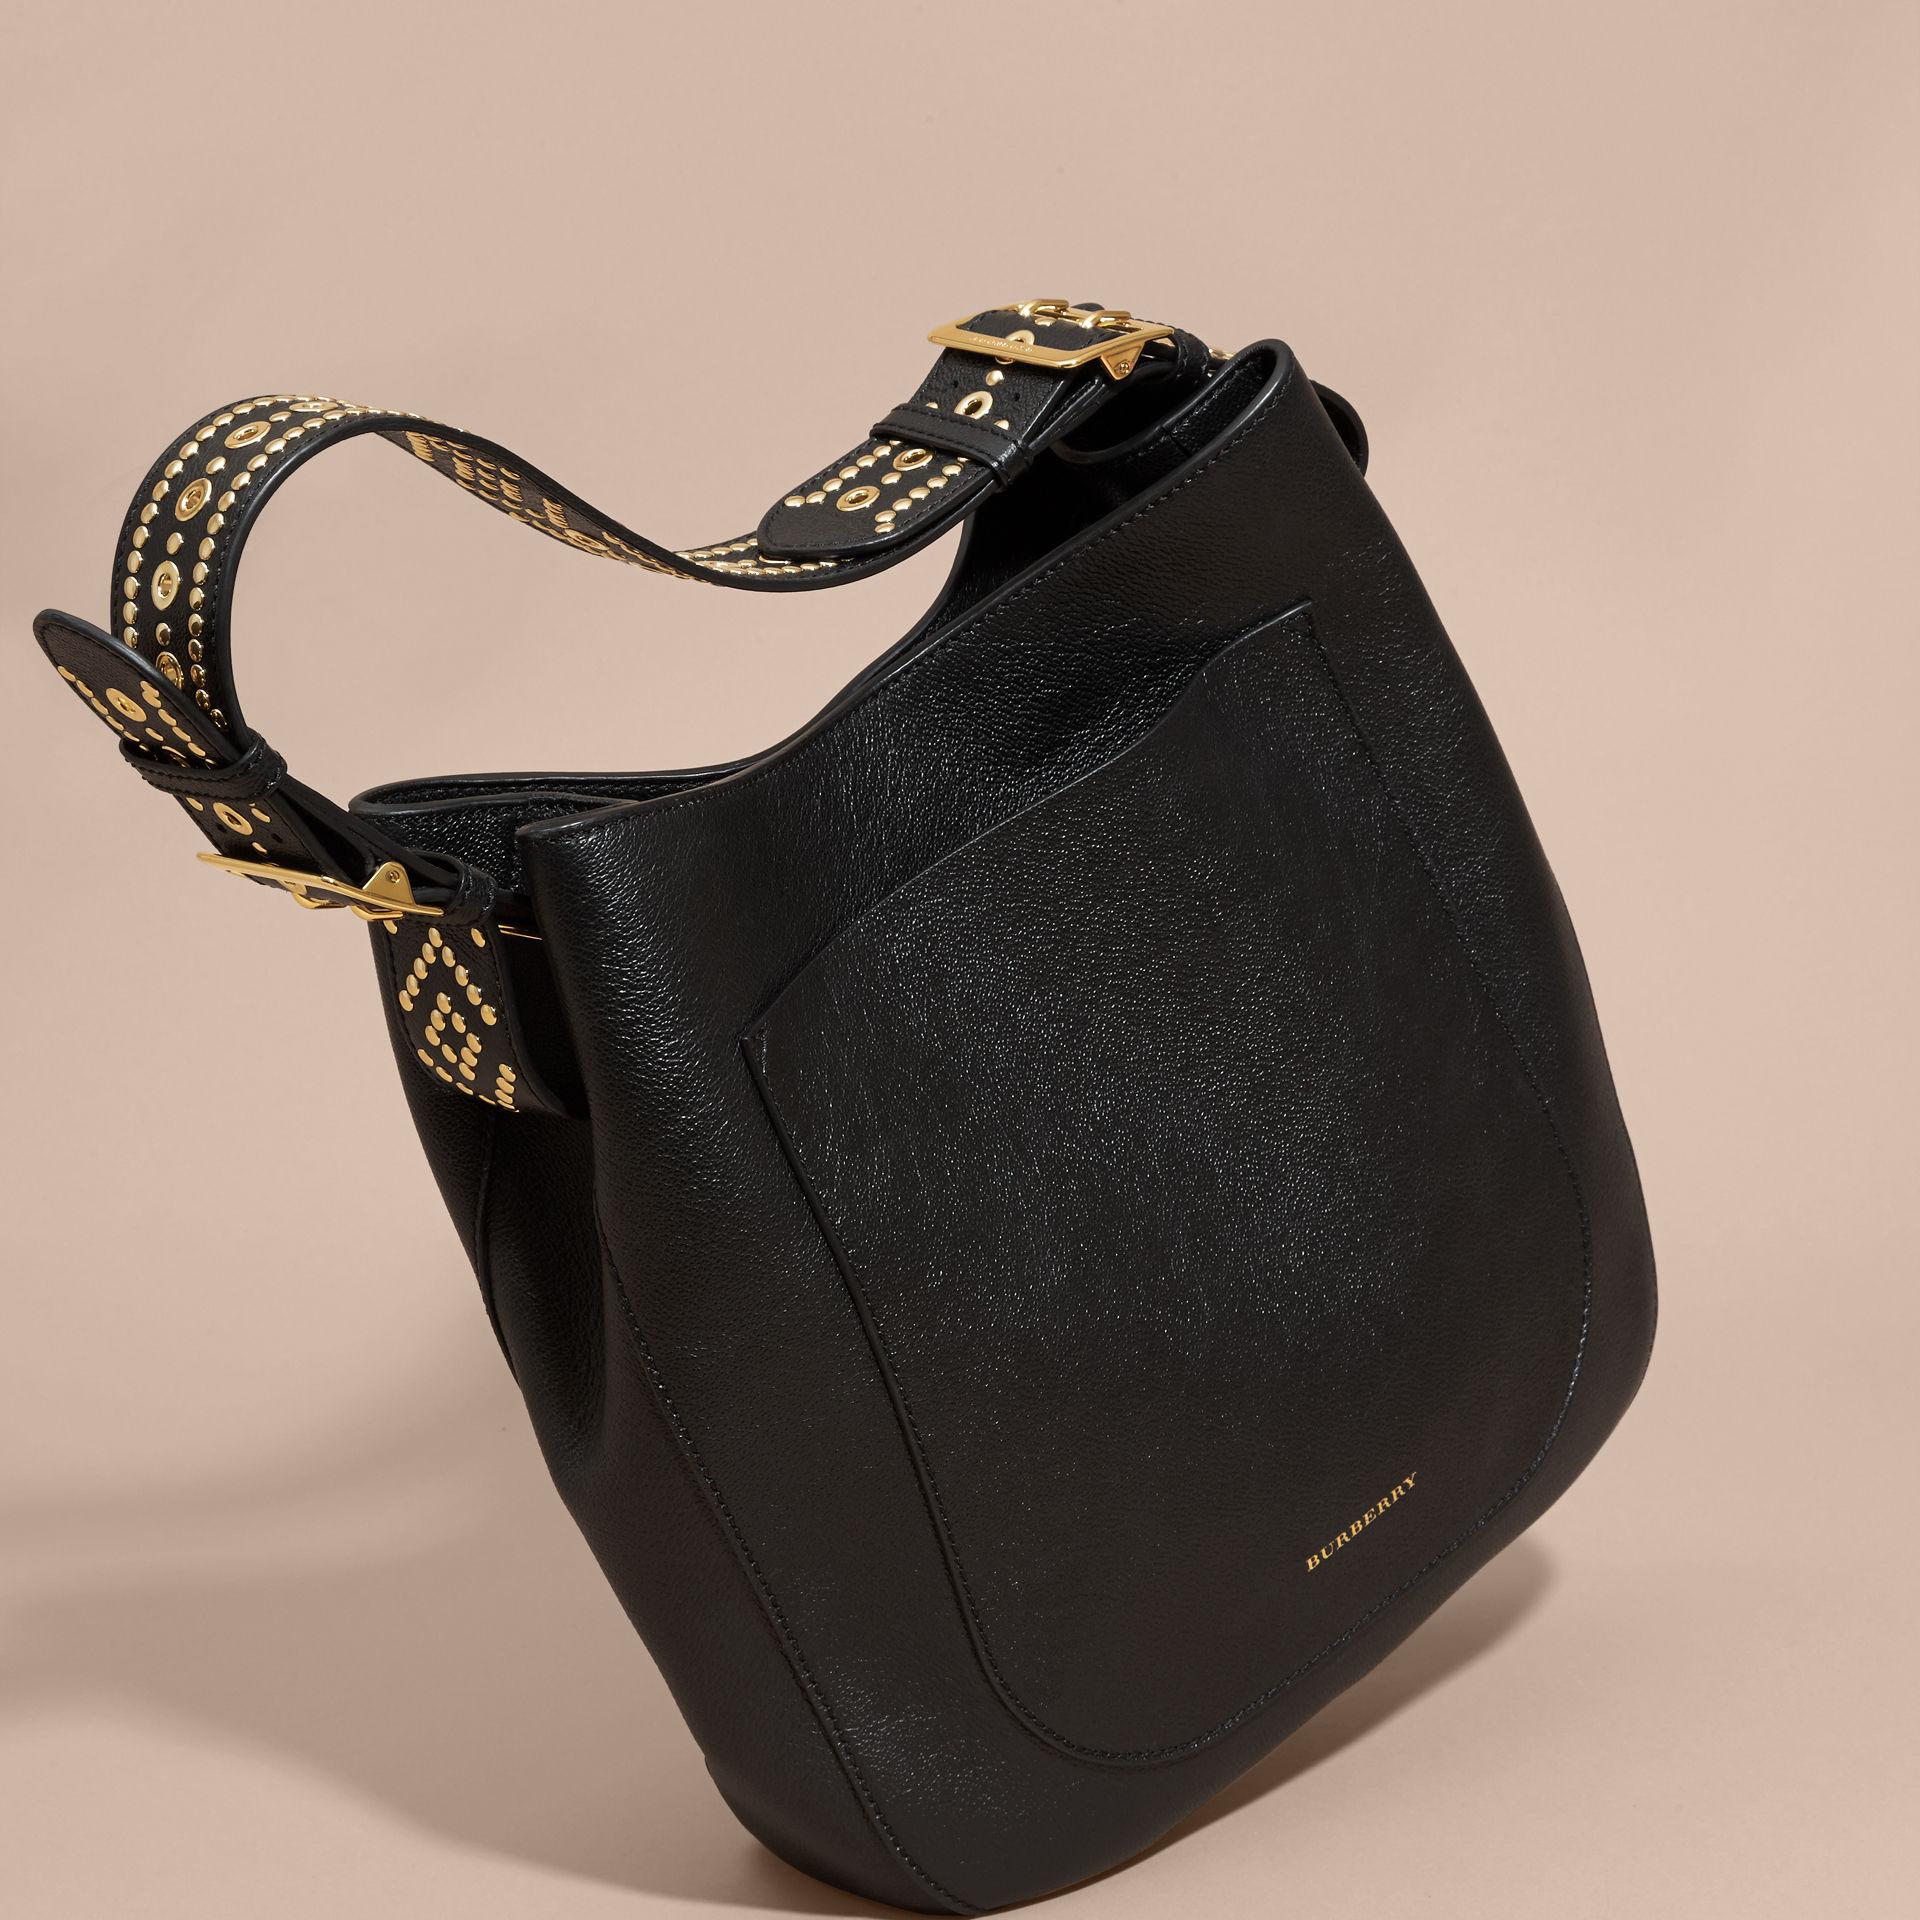 Burberry Stud Detail Textured Leather Shoulder Bag in Black | Lyst